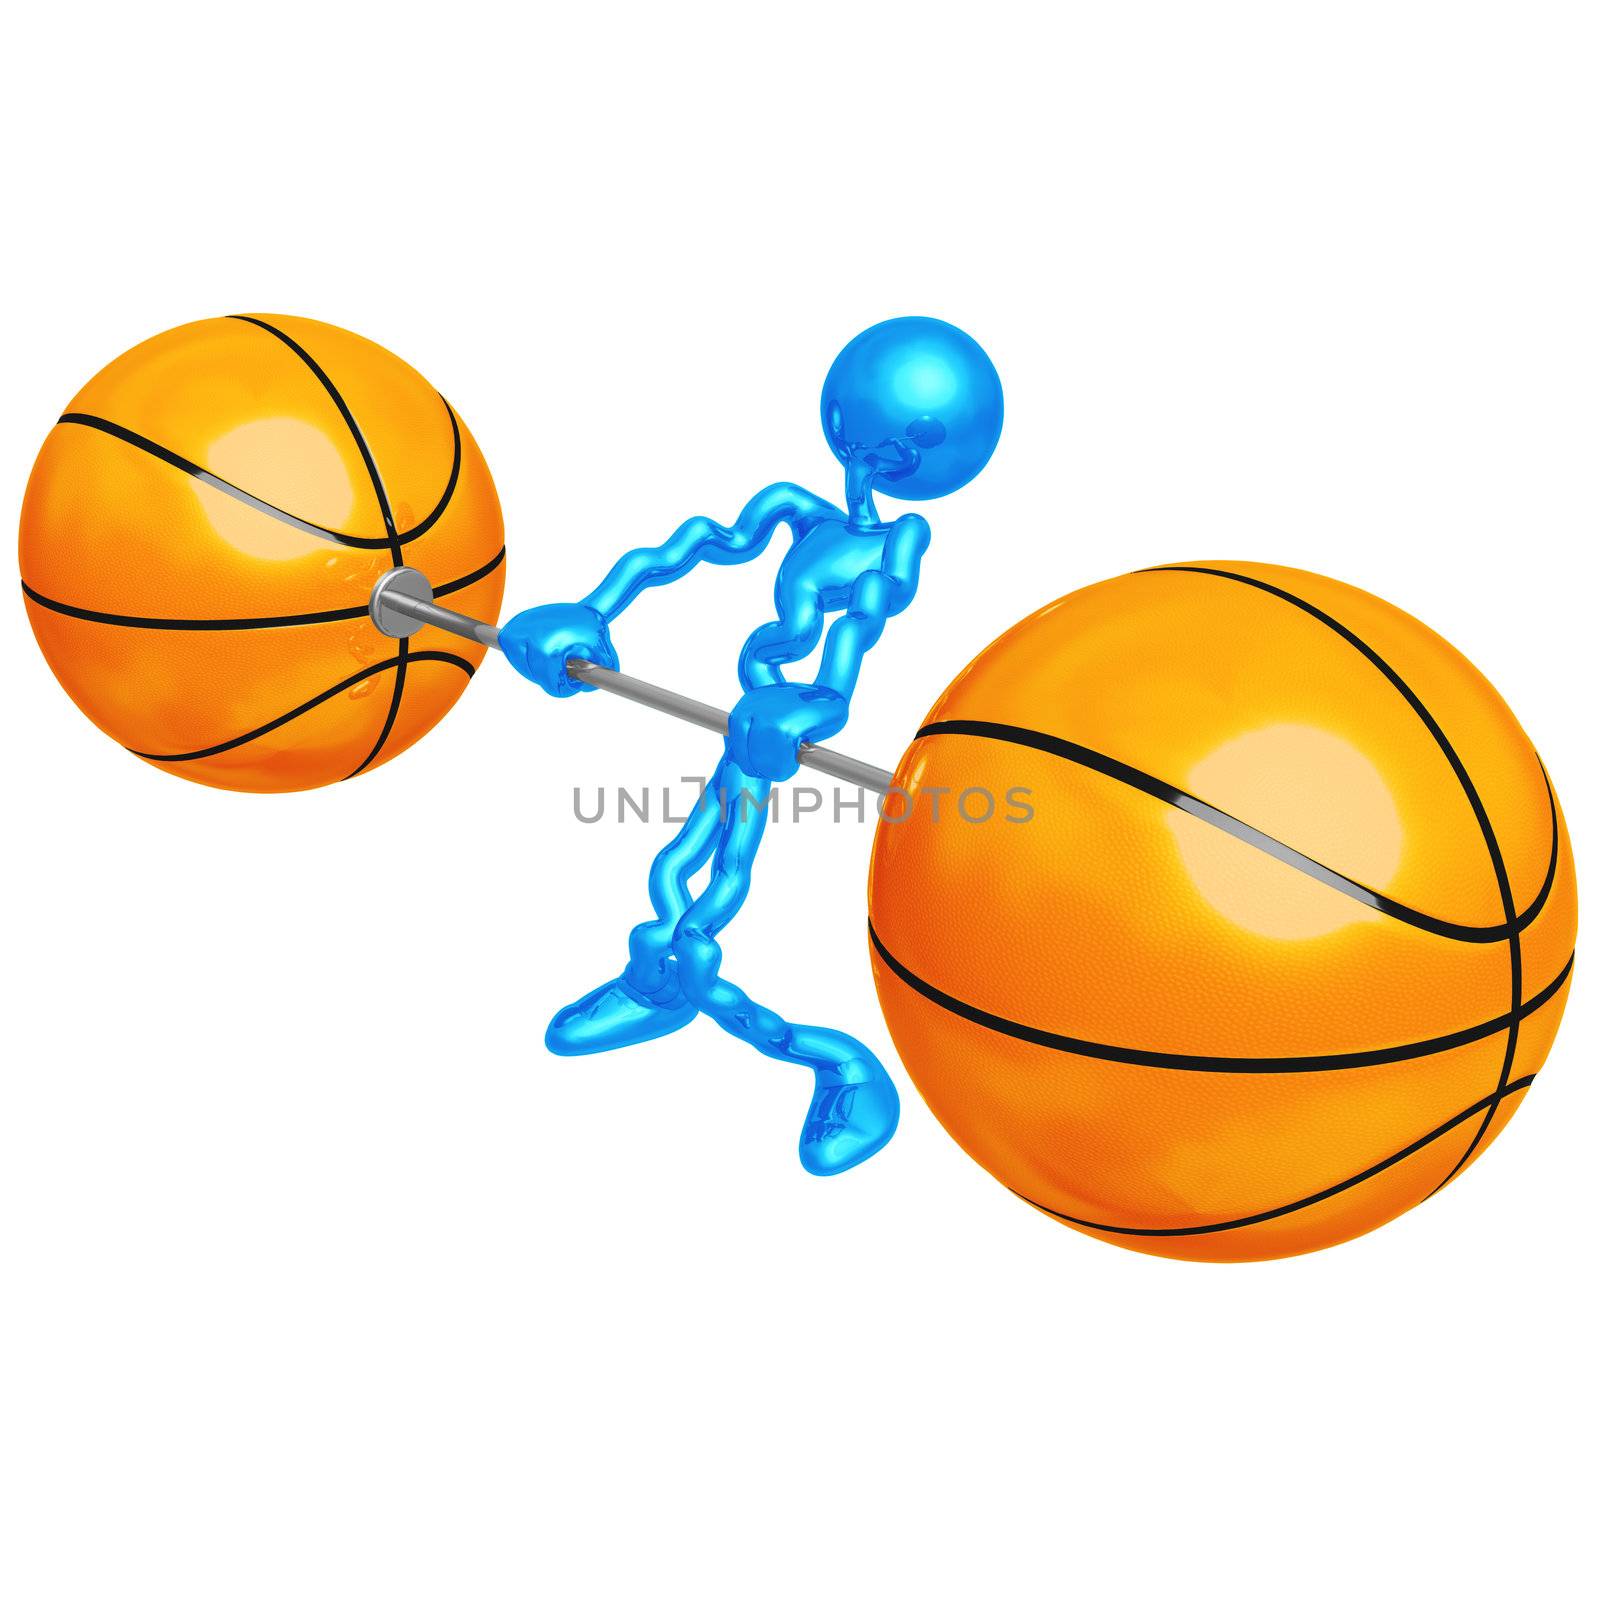 Basketball Weight Training by LuMaxArt